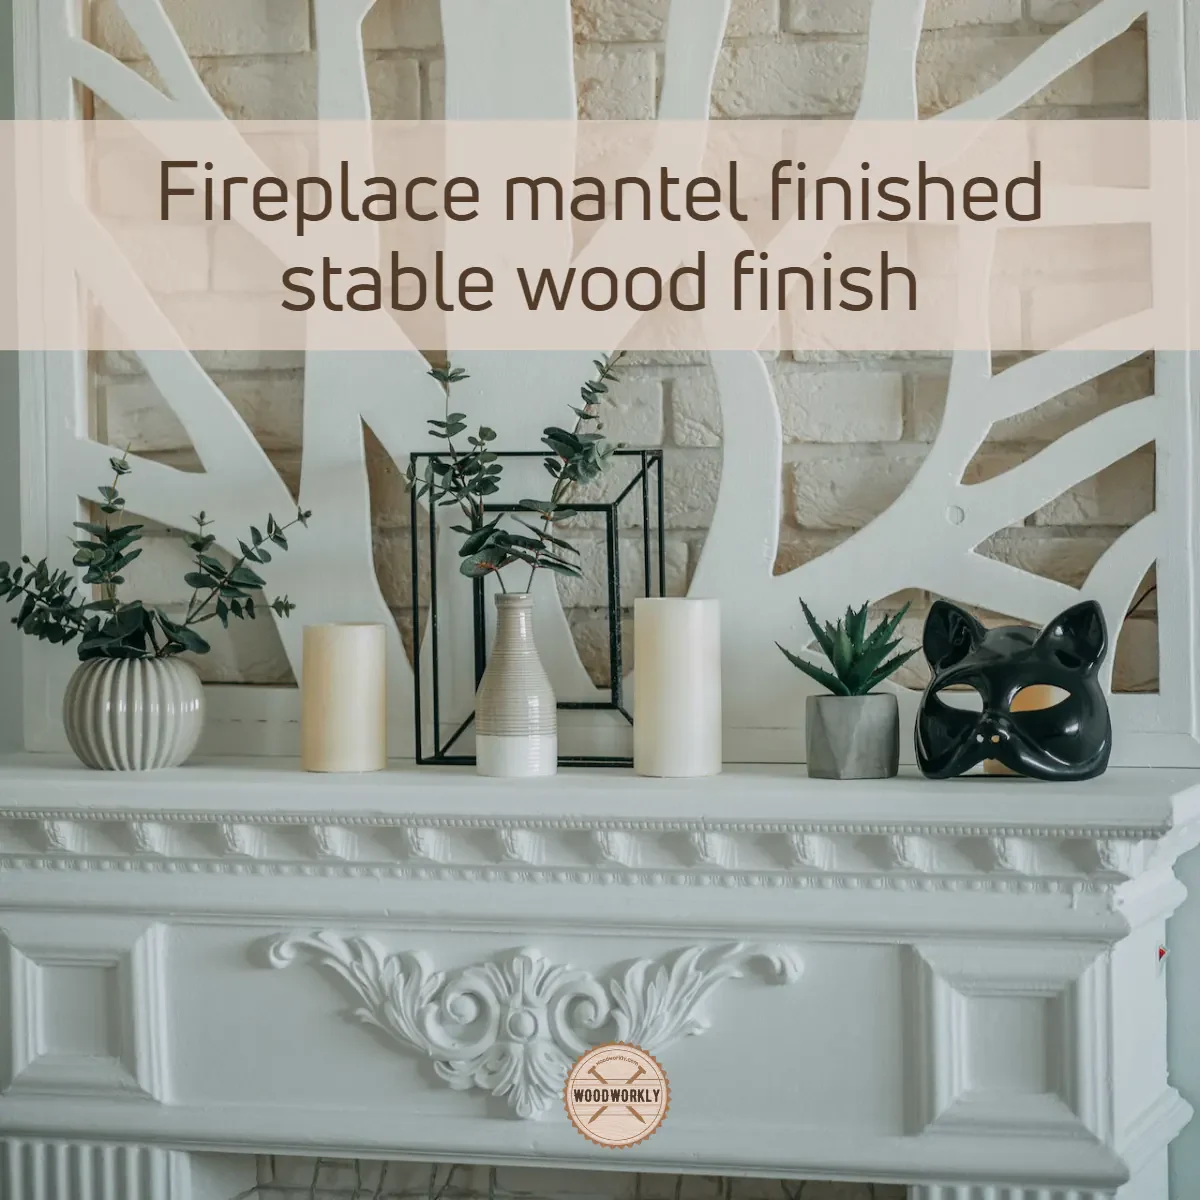 Fireplace mantel finished stable wood finish